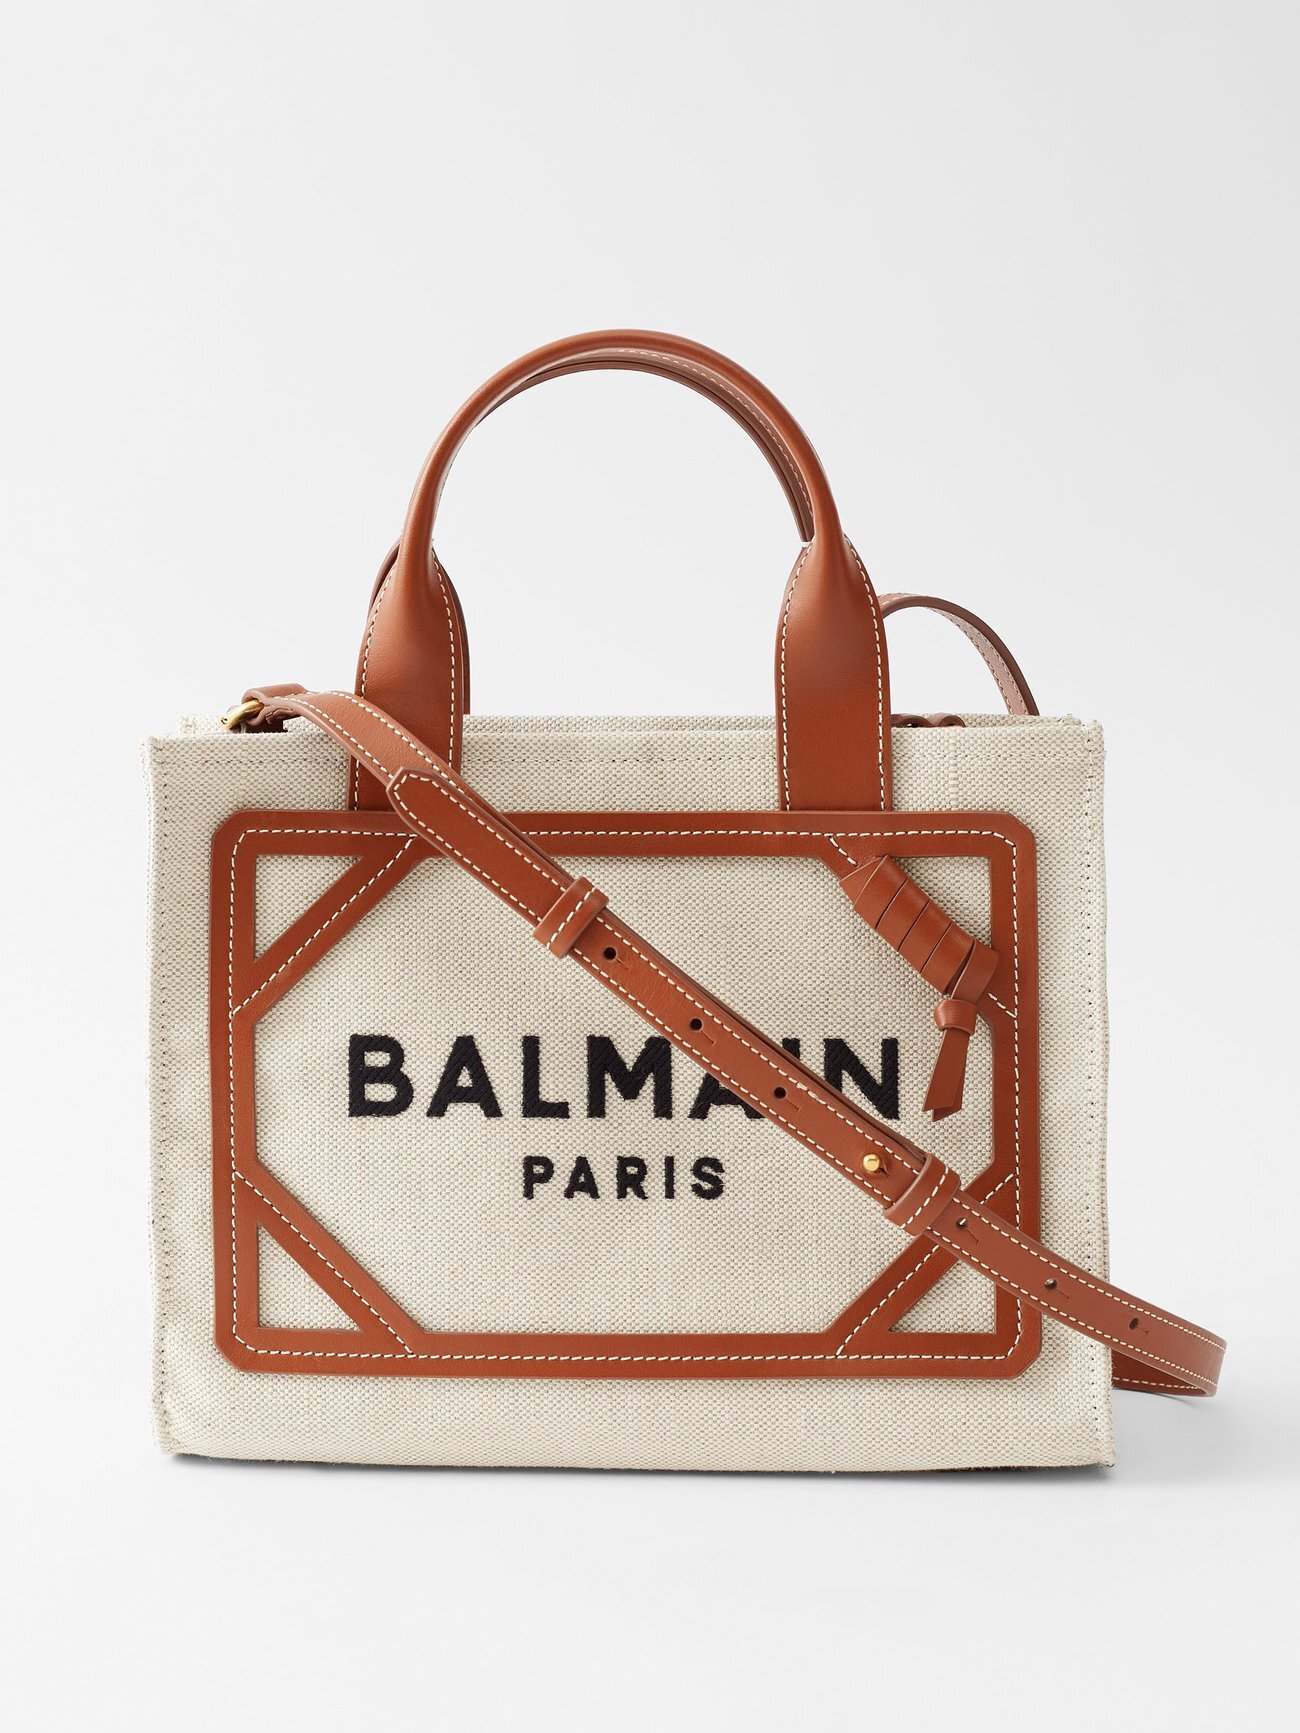 Balmain - B-army Small Leather-trim Canvas Tote Bag - Womens - Tan White